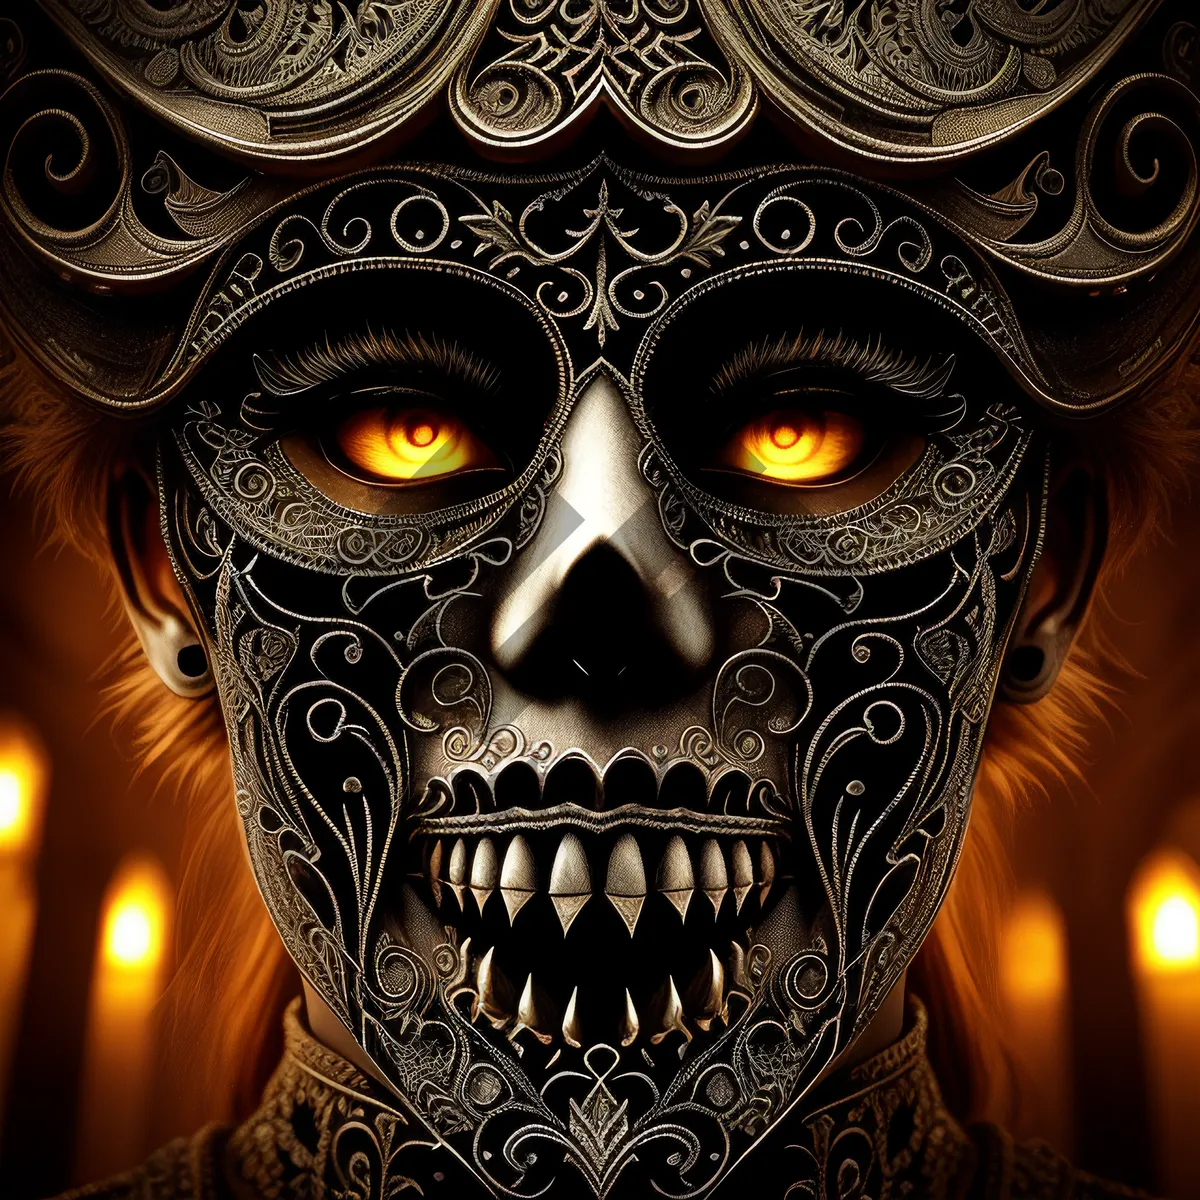 Picture of Venetian Pirate Mask - Stunning Masquerade Fashion Portrait